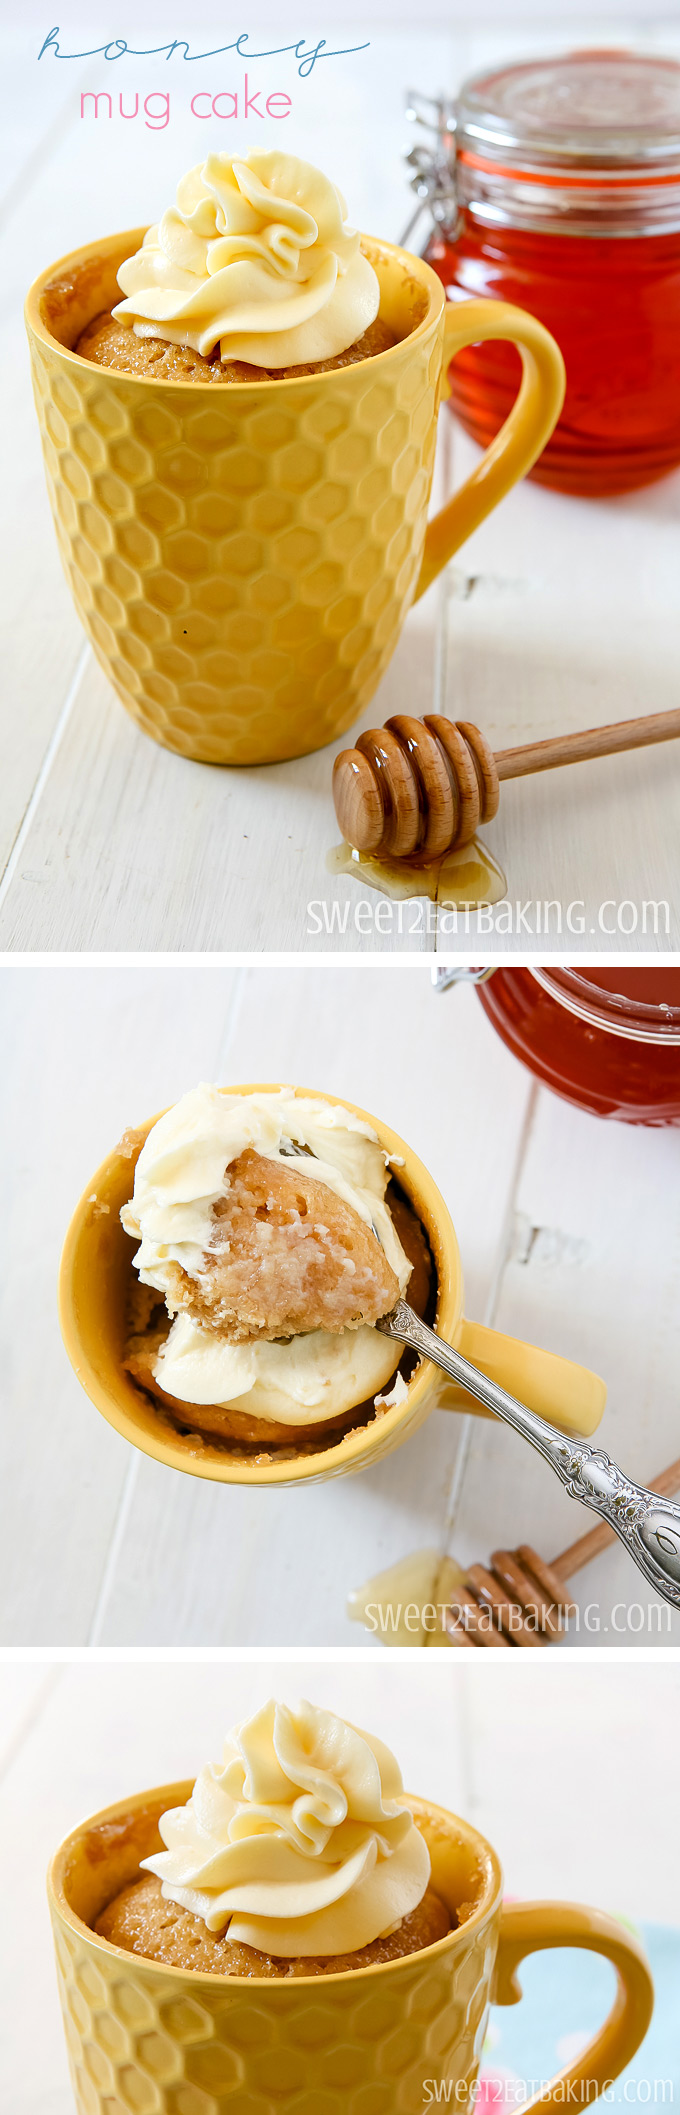 Honey Mug Cake Recipe with Frosting by Sweet2EatBaking.com